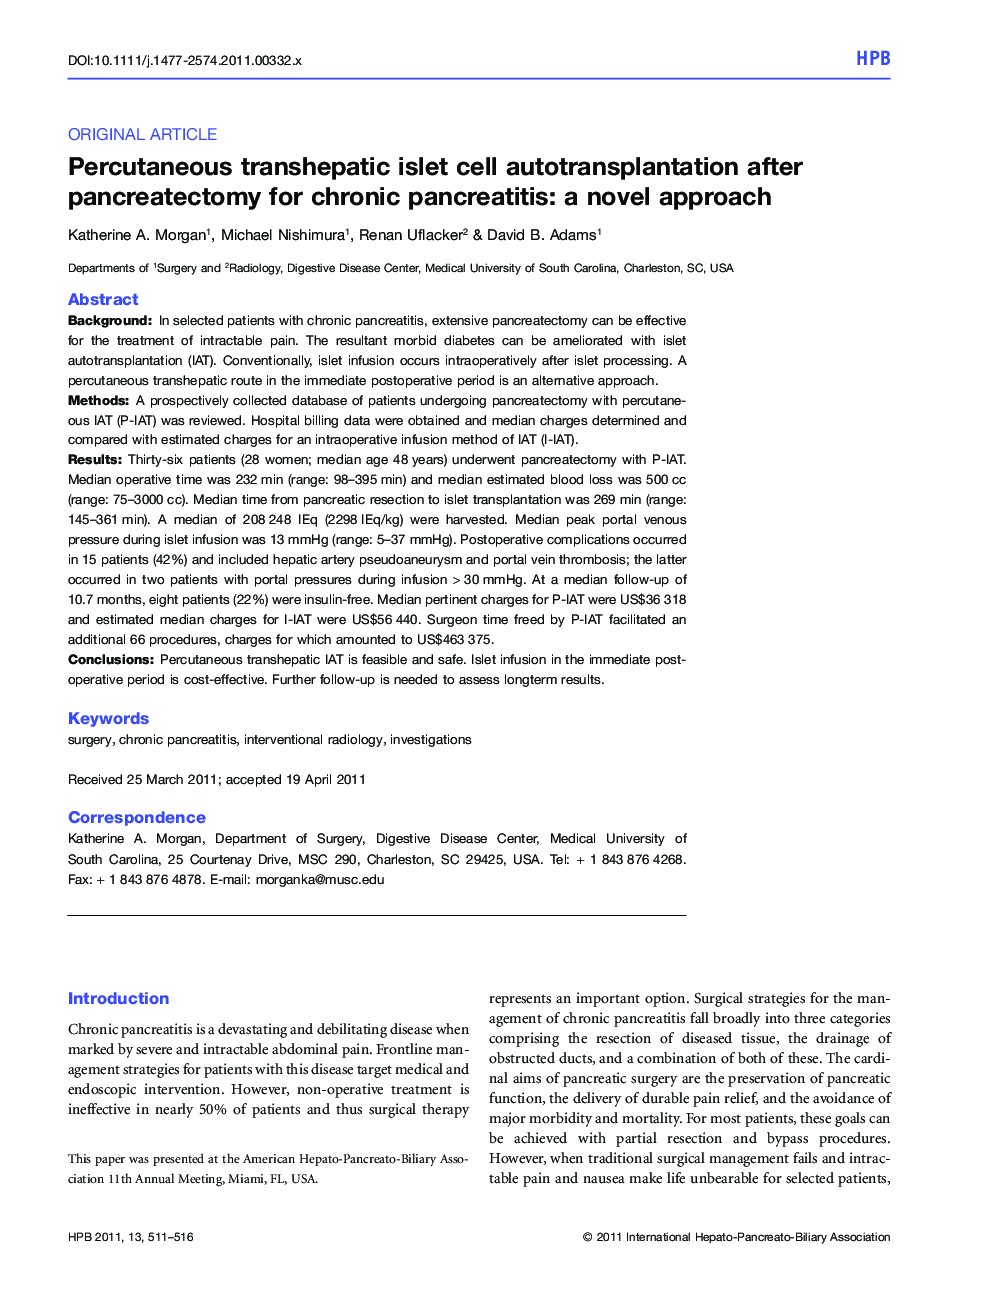 Percutaneous transhepatic islet cell autotransplantation after pancreatectomy for chronic pancreatitis: a novel approach